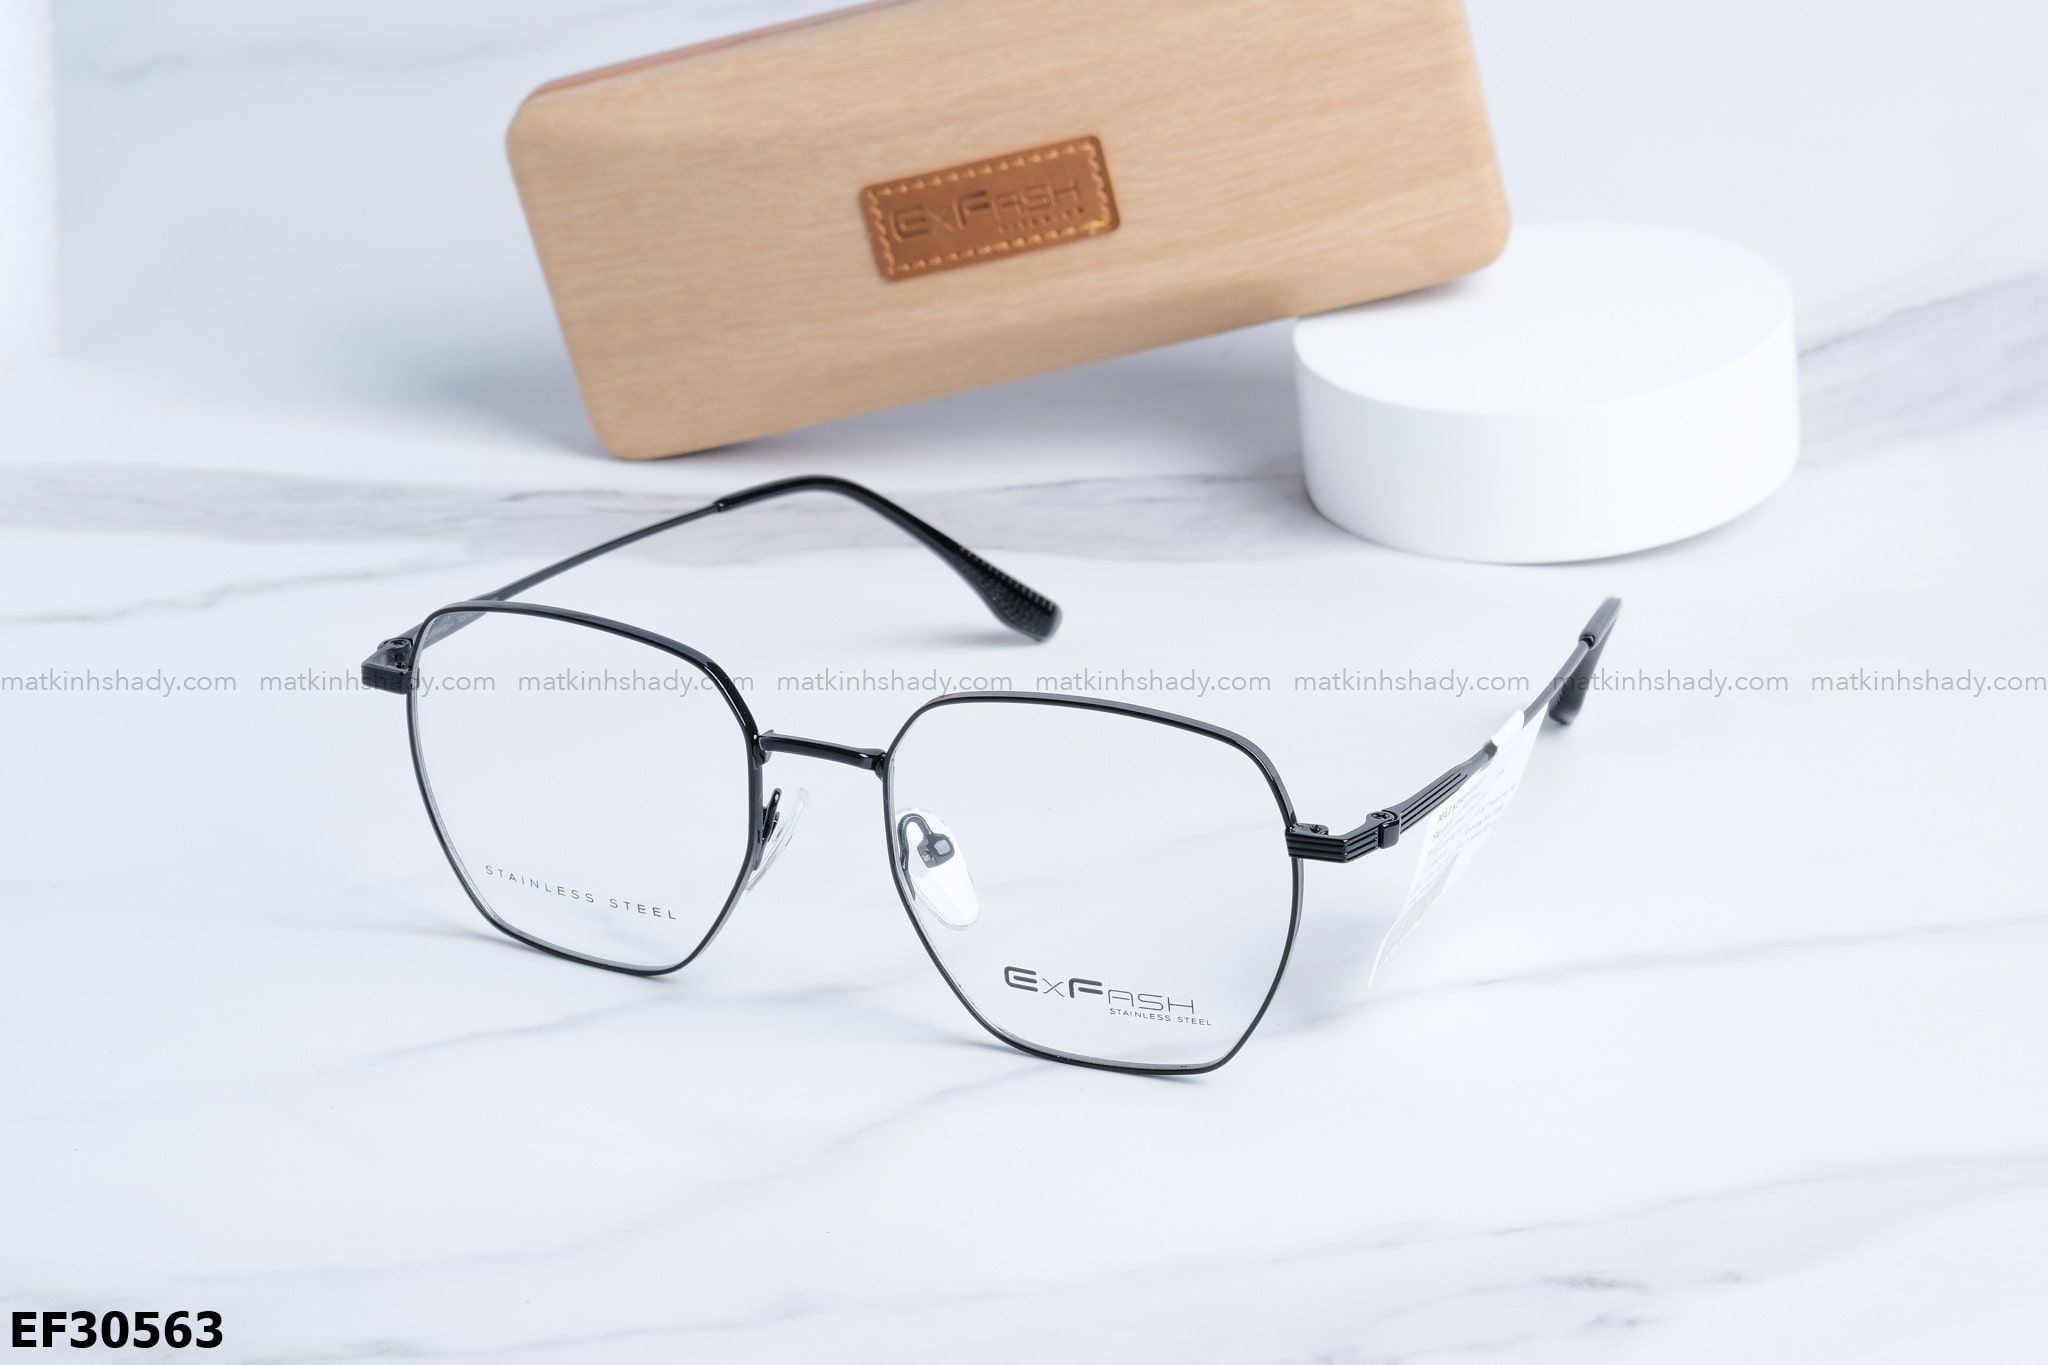  Exfash Eyewear - Glasses - EF30563 